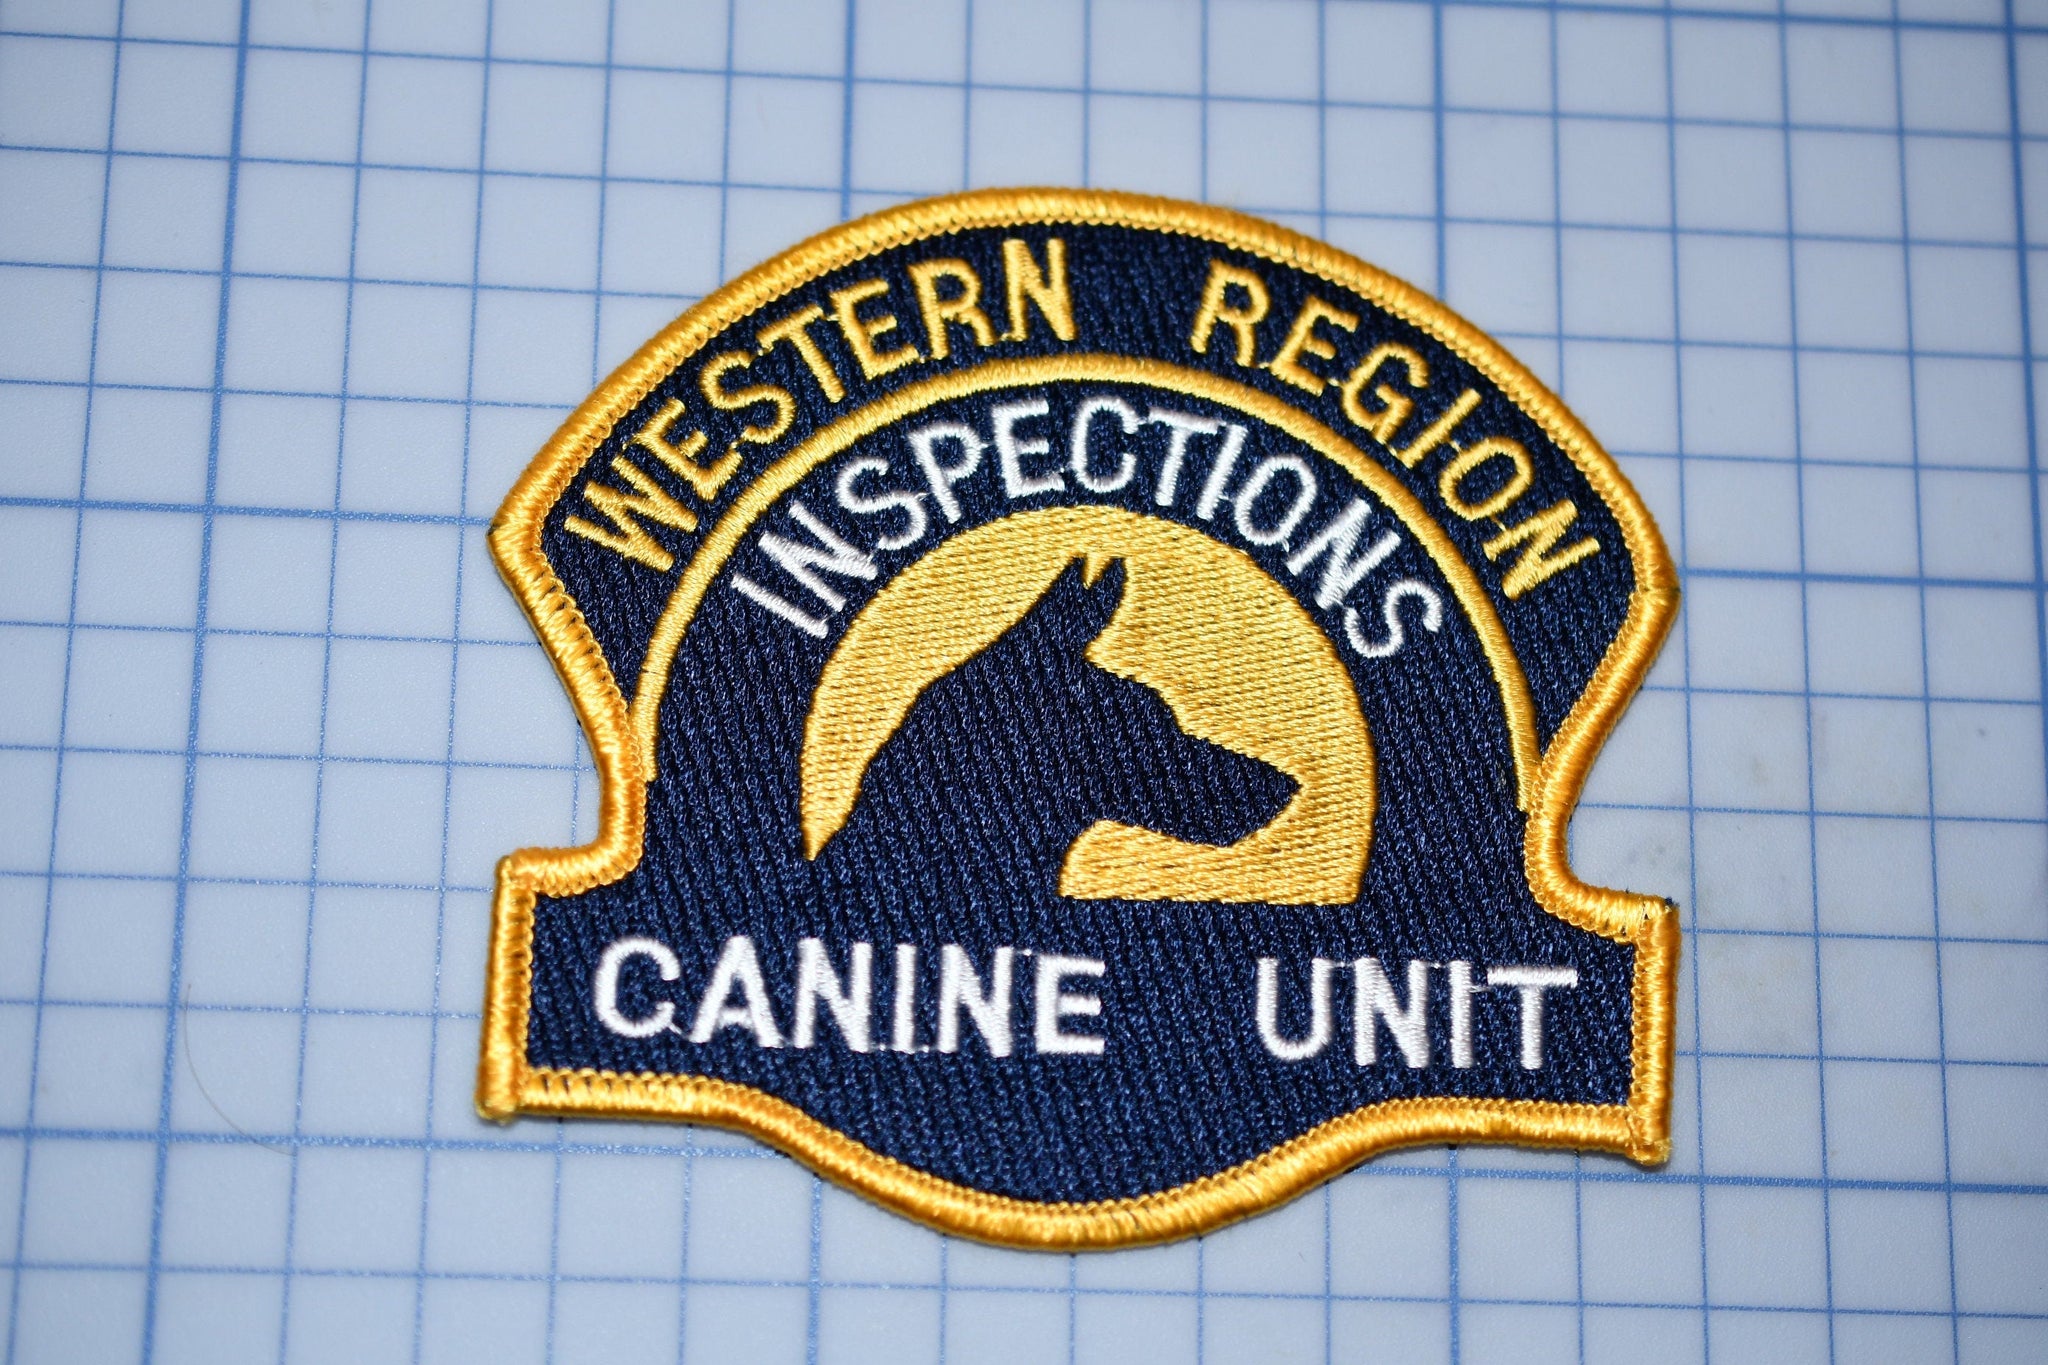 INS Western Region Inspectors Canine Unit Patch (B23-325)